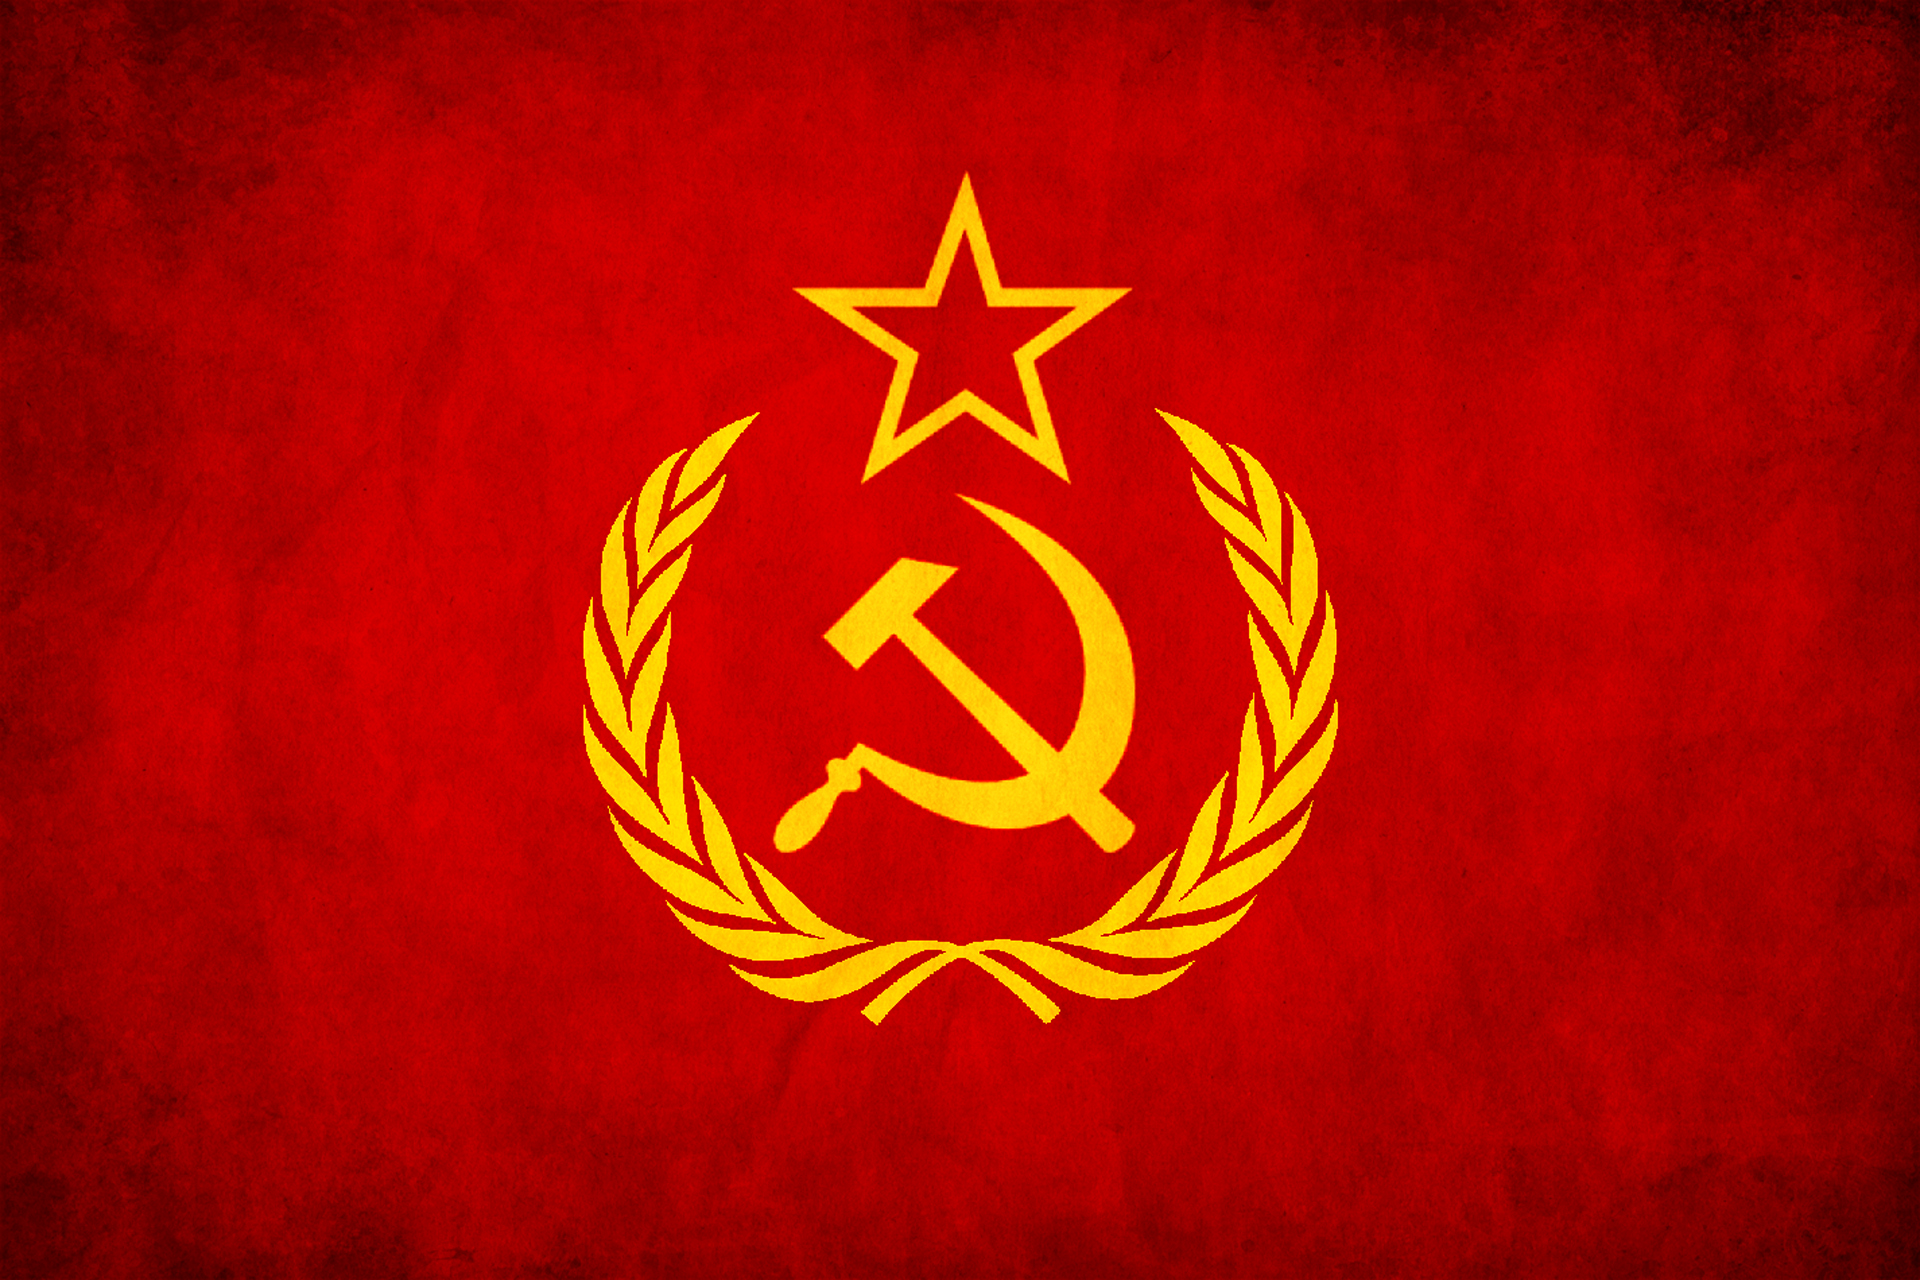 Soviet_Union_USSR_Grunge_Flag_by_think0.jpg